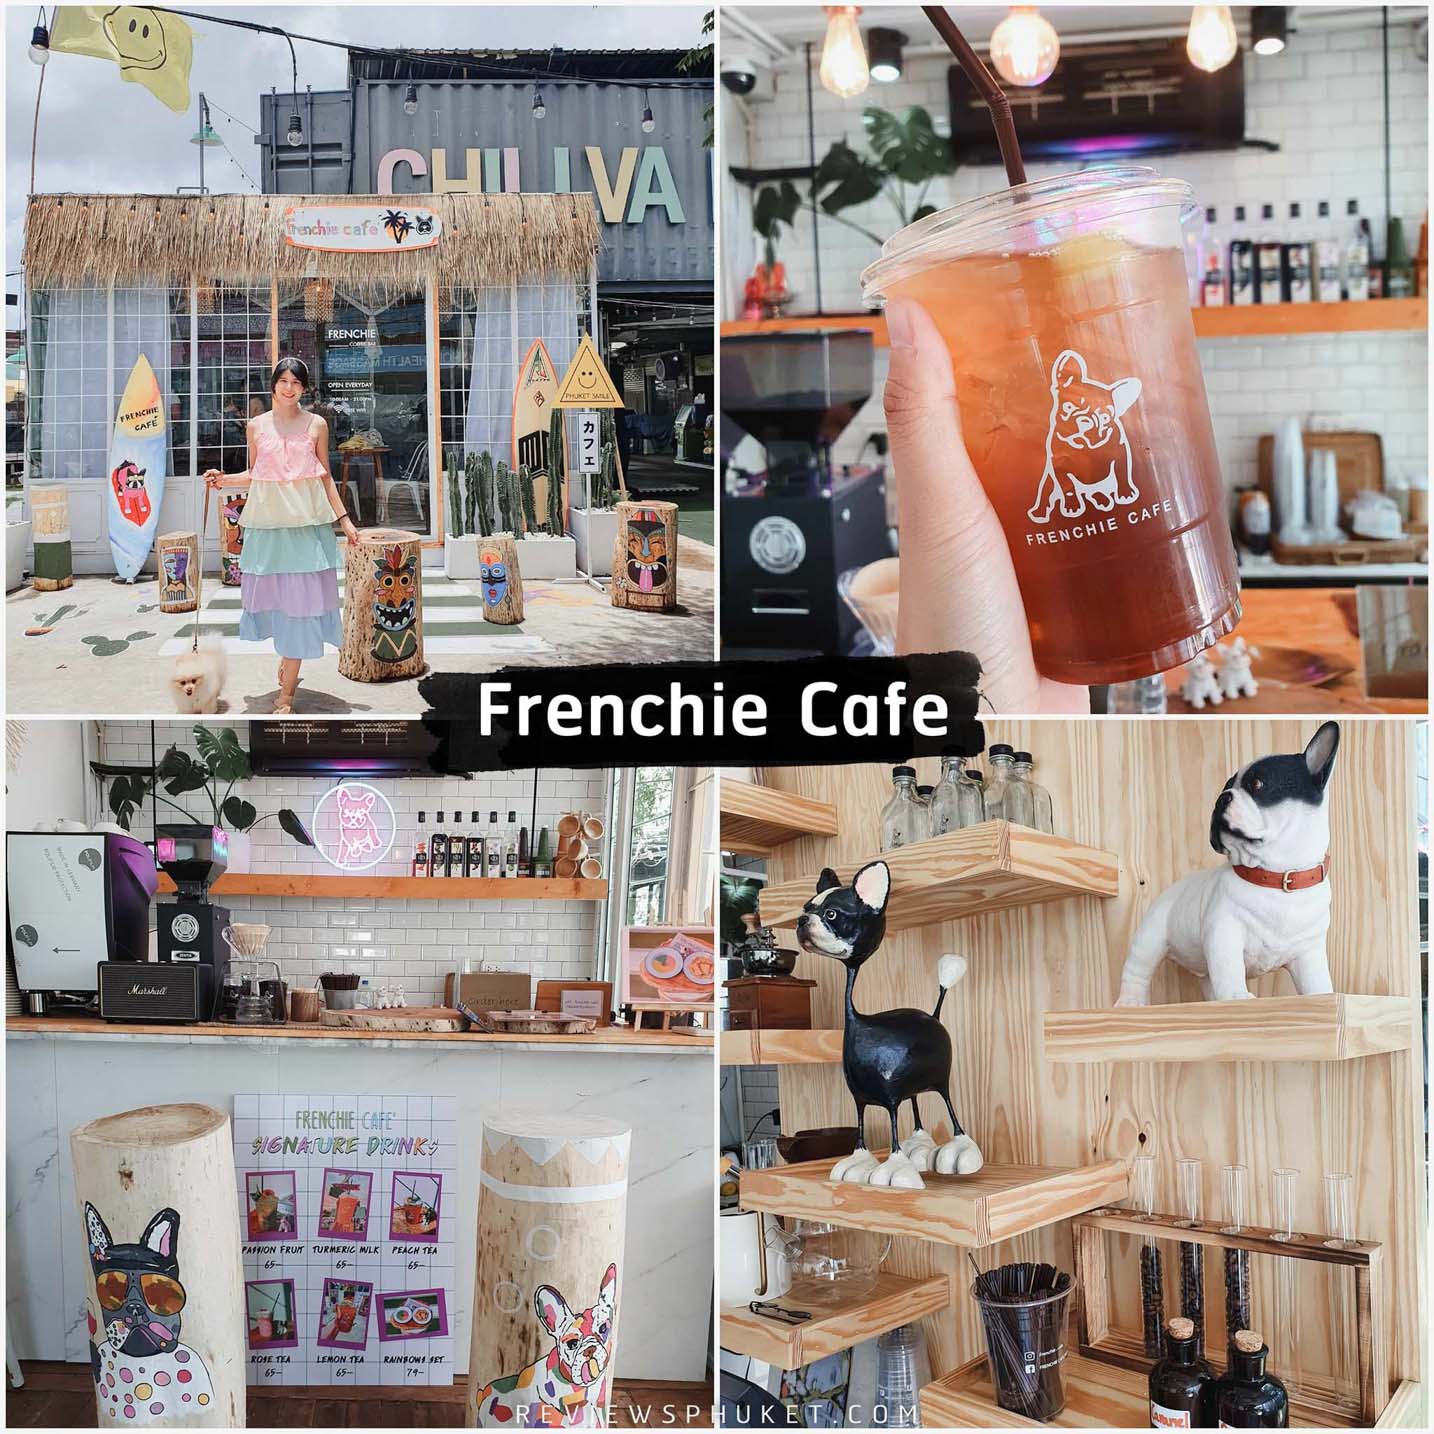 Frenchie-Cafe -ร้านน่ารักสไตล์น้องหมาา ภูเก็ต,ที่พัก,โรงแรม,รีสอร์ท,สถานที่ท่องเที่ยว,ของกิน,จุดเช็คอิน,ที่เที่ยว,จุดถ่ายรูป